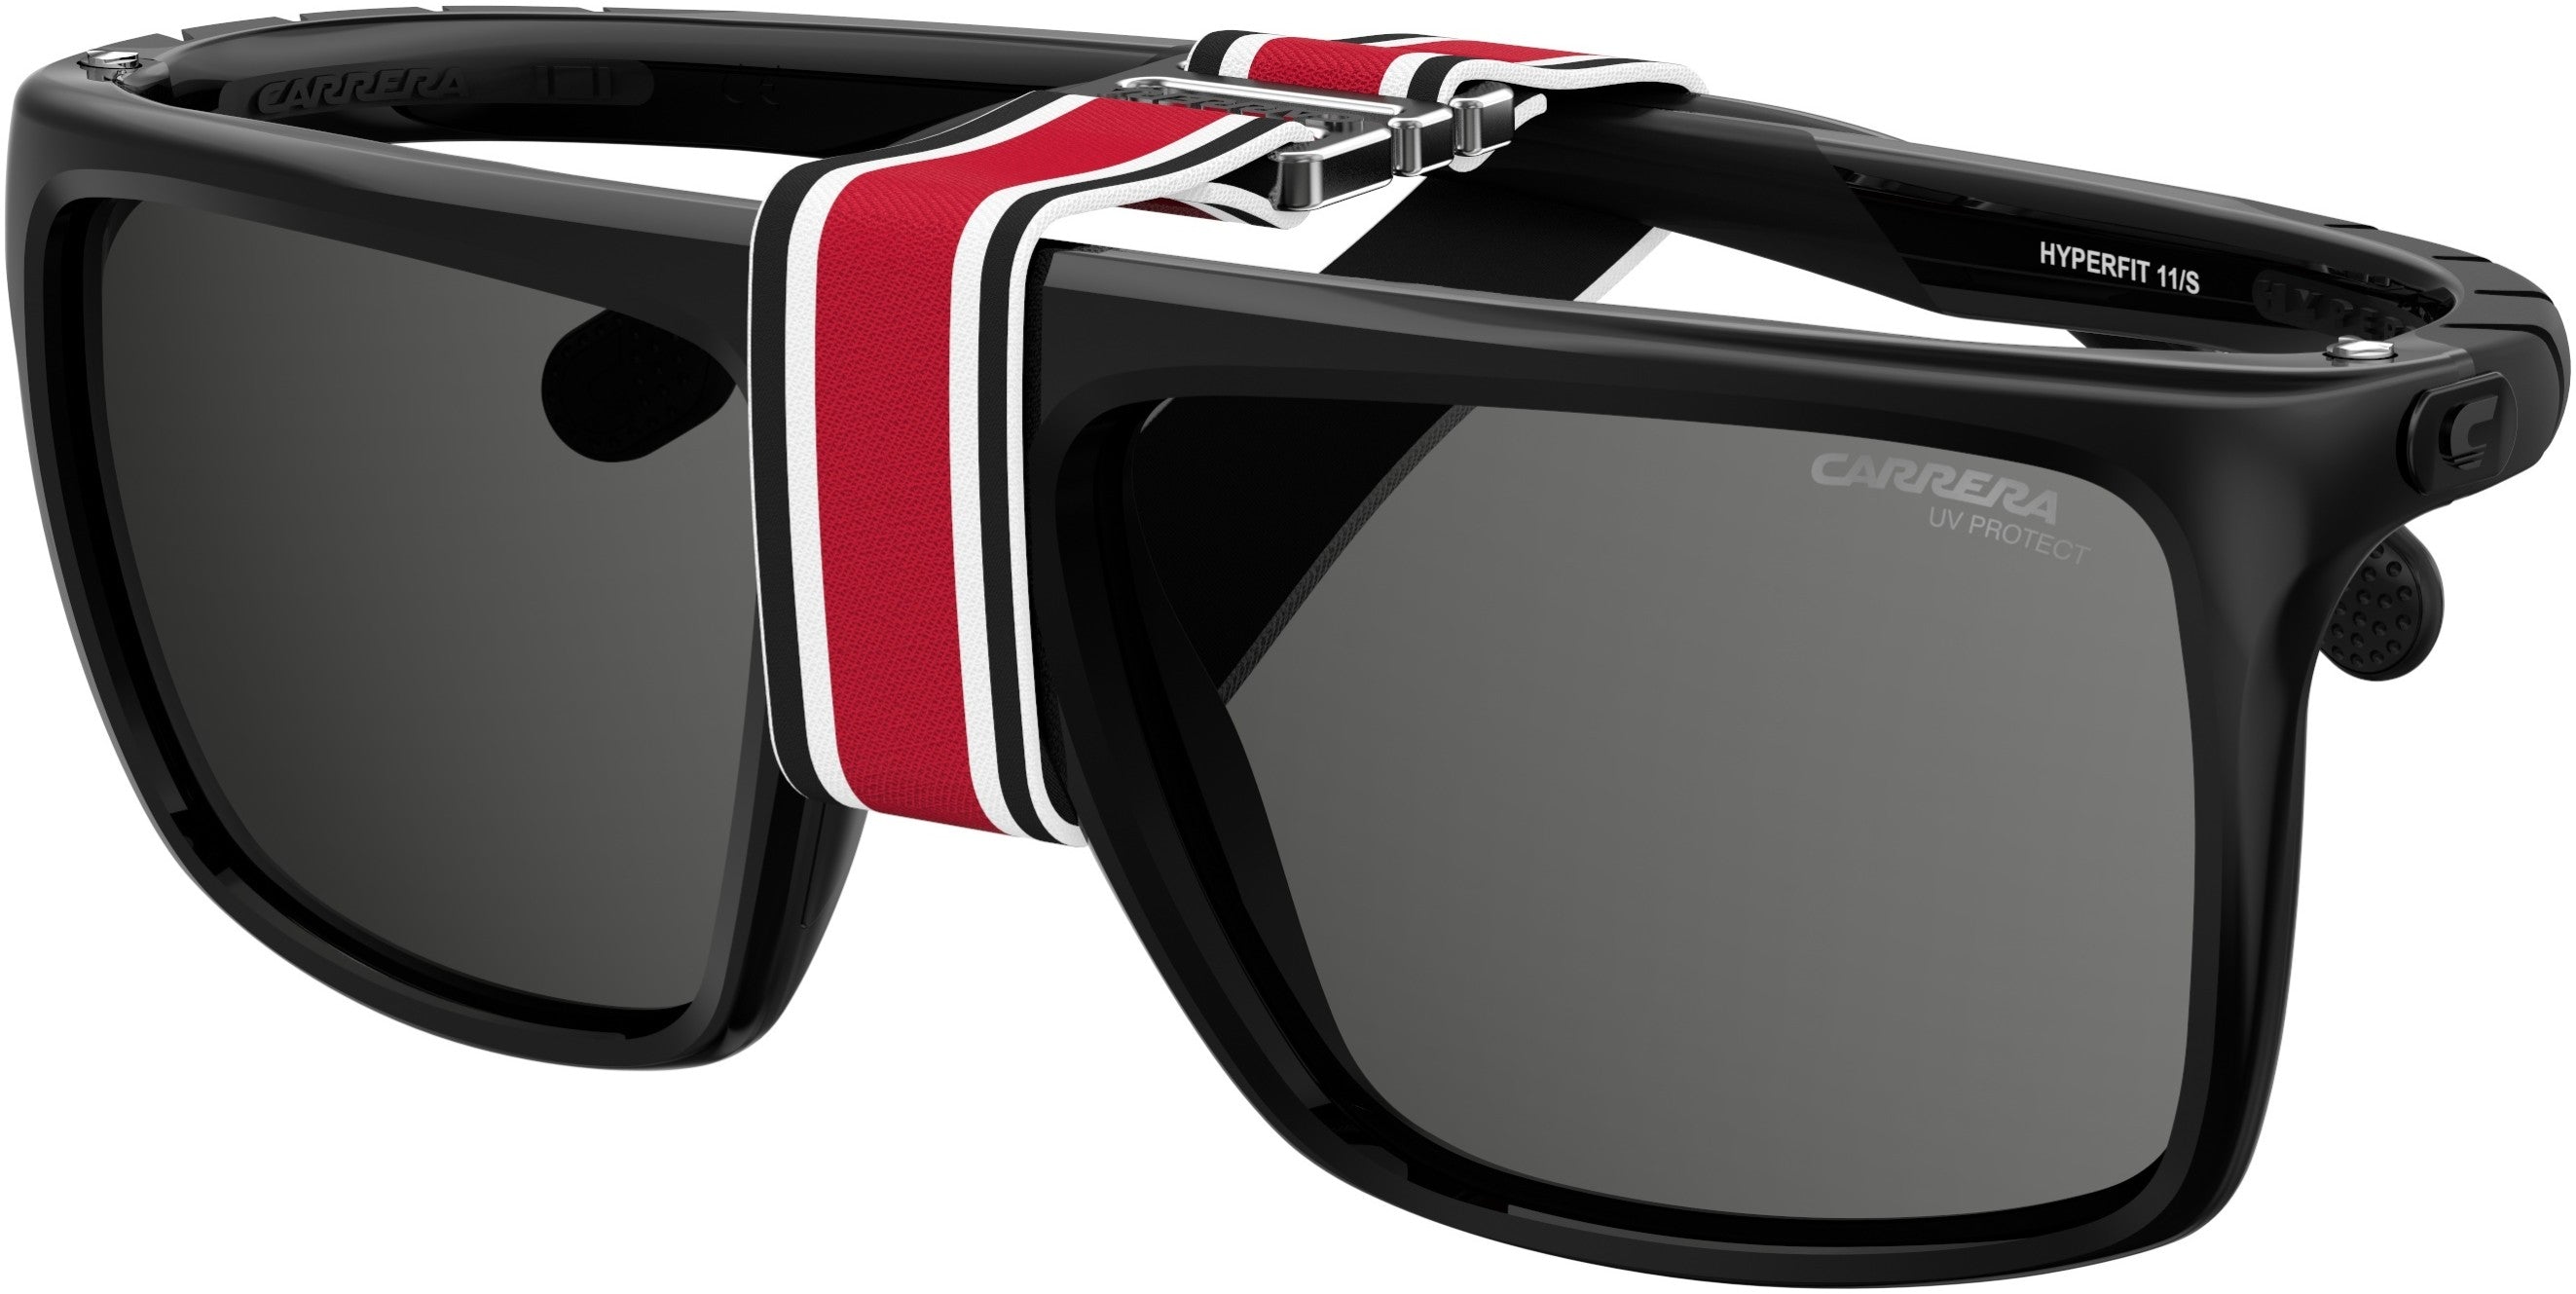 Carrera Hyperfit 11/S Rectangular Sunglasses 0807-0807  Black (IR Gray)